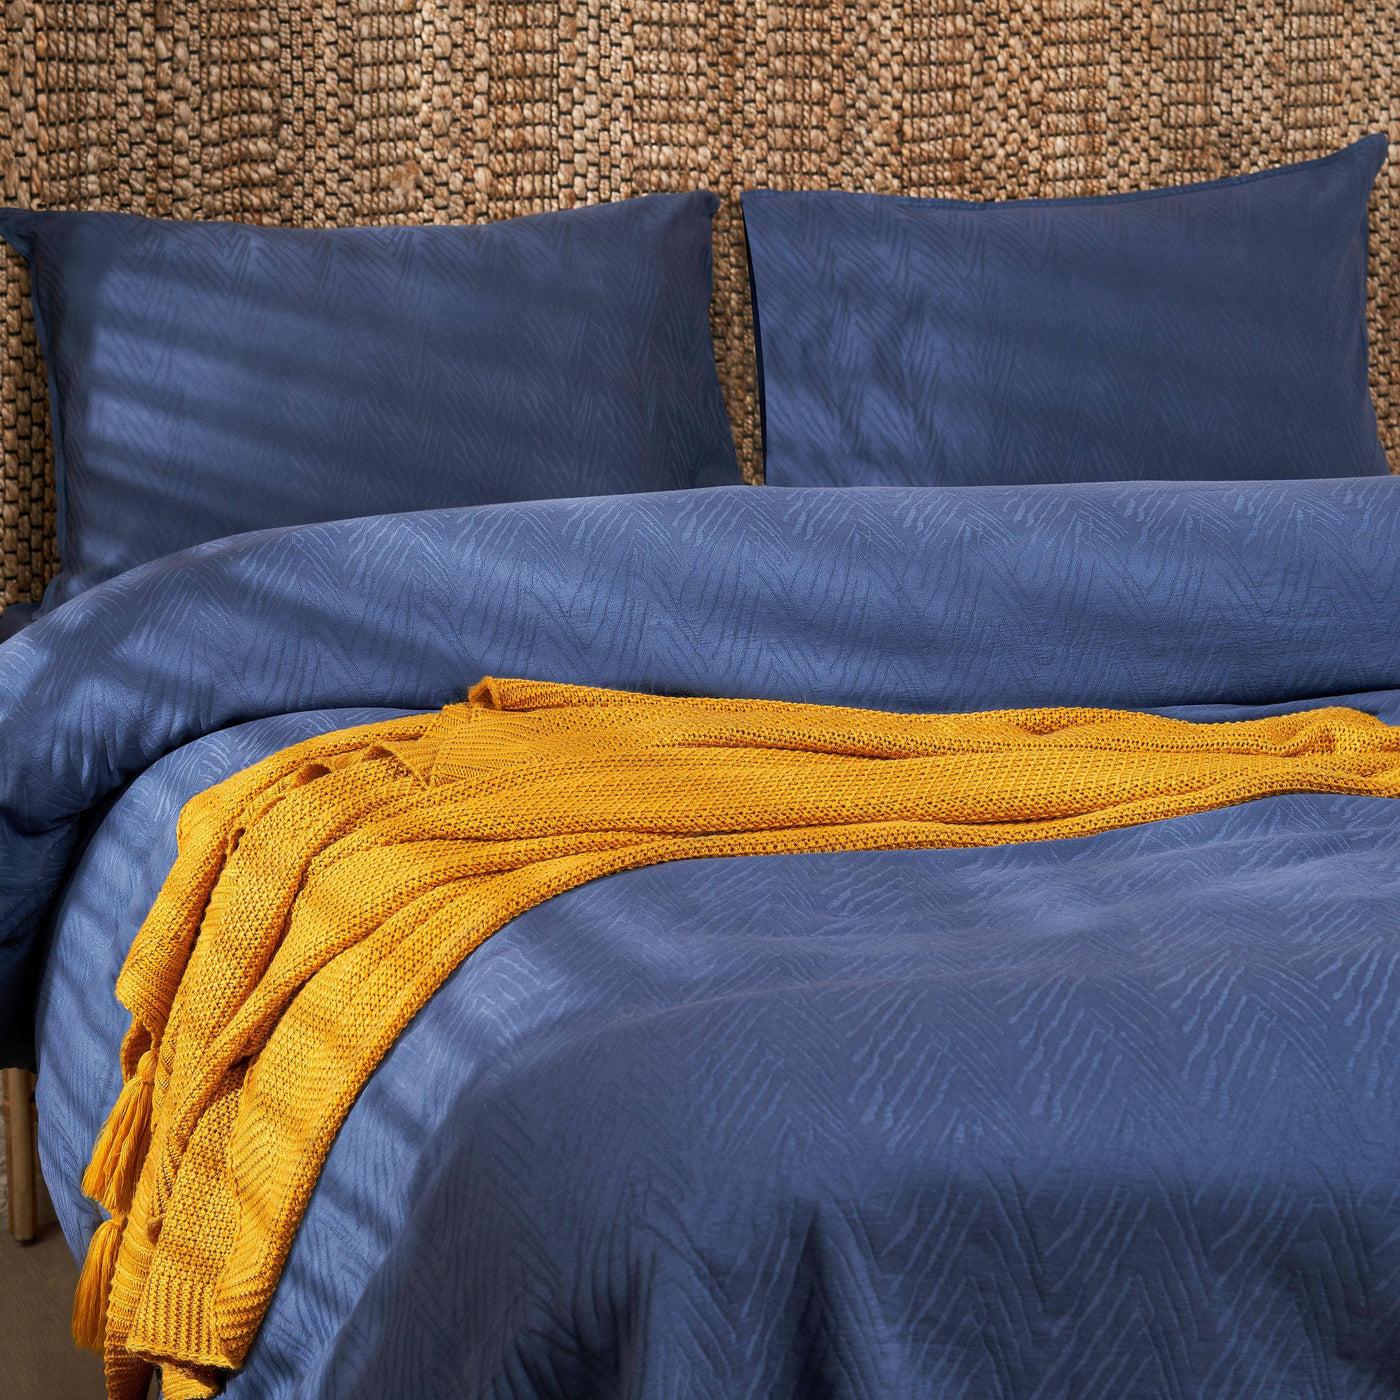 Freddie 100% Turkish Cotton Jacquard 300 TC Duvet Cover Set + Fitted Sheet, Navy, Super King Size Bedding Sets sazy.com